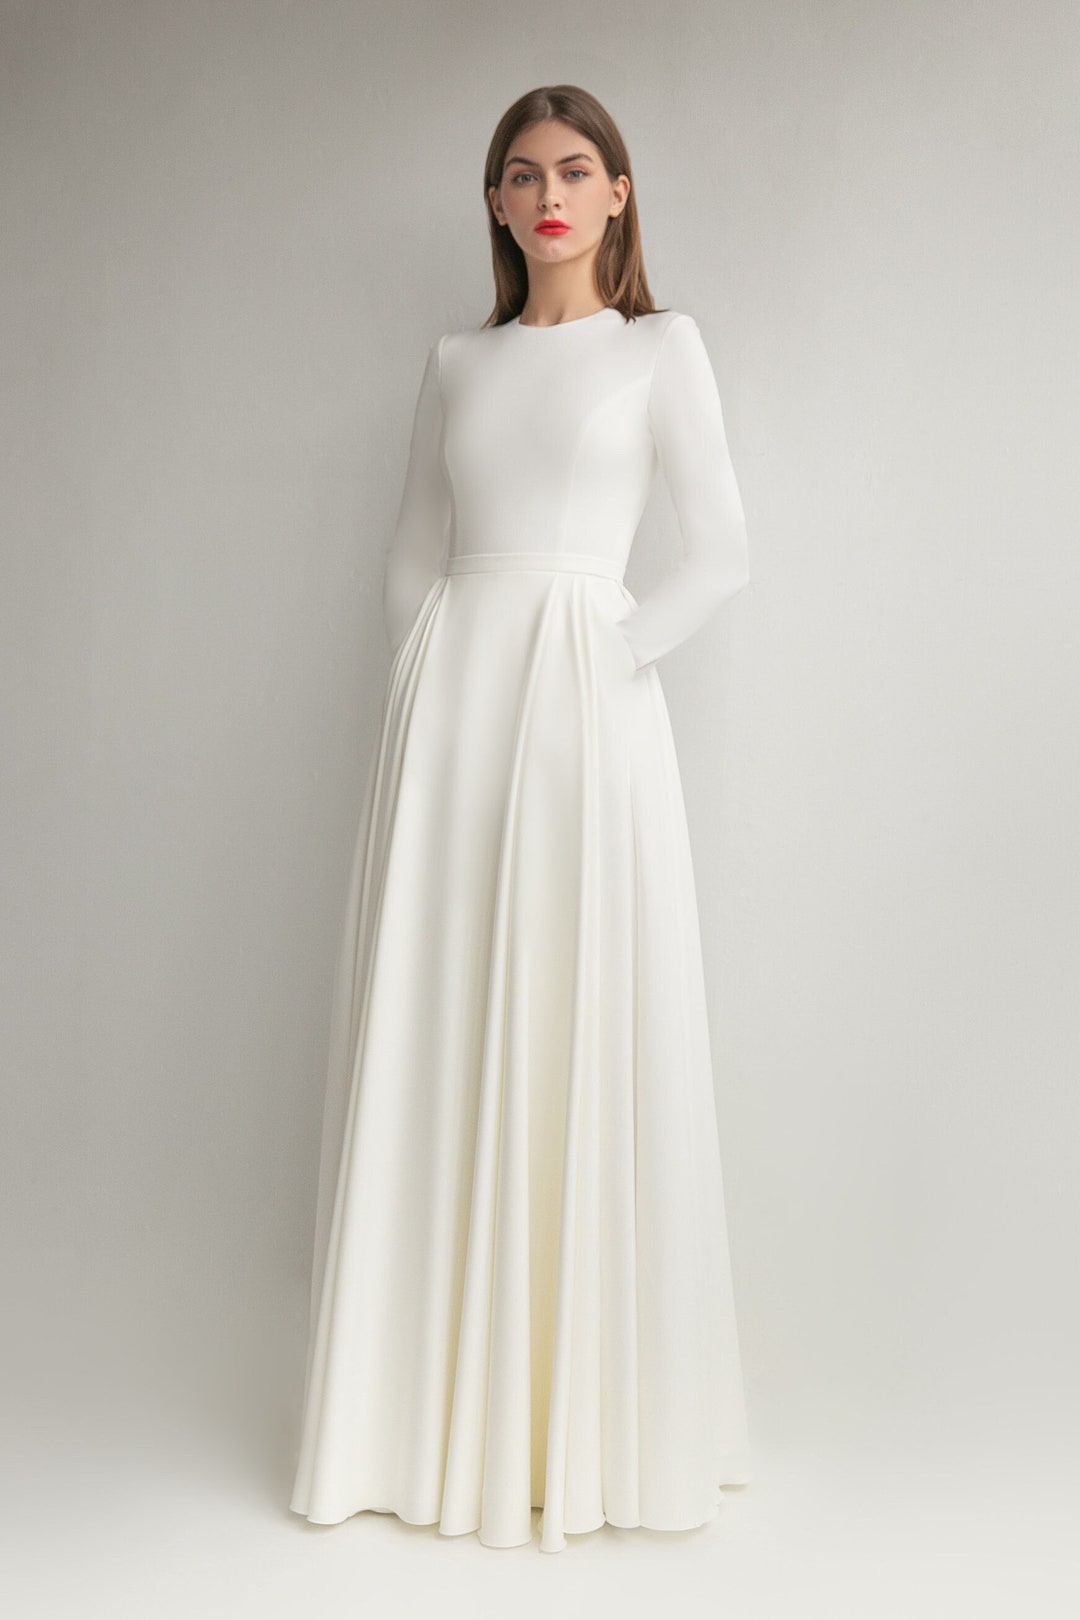 Modest Wedding Dress DEBORA. Crepe Wedding Dress Long Sleeve Dress ...